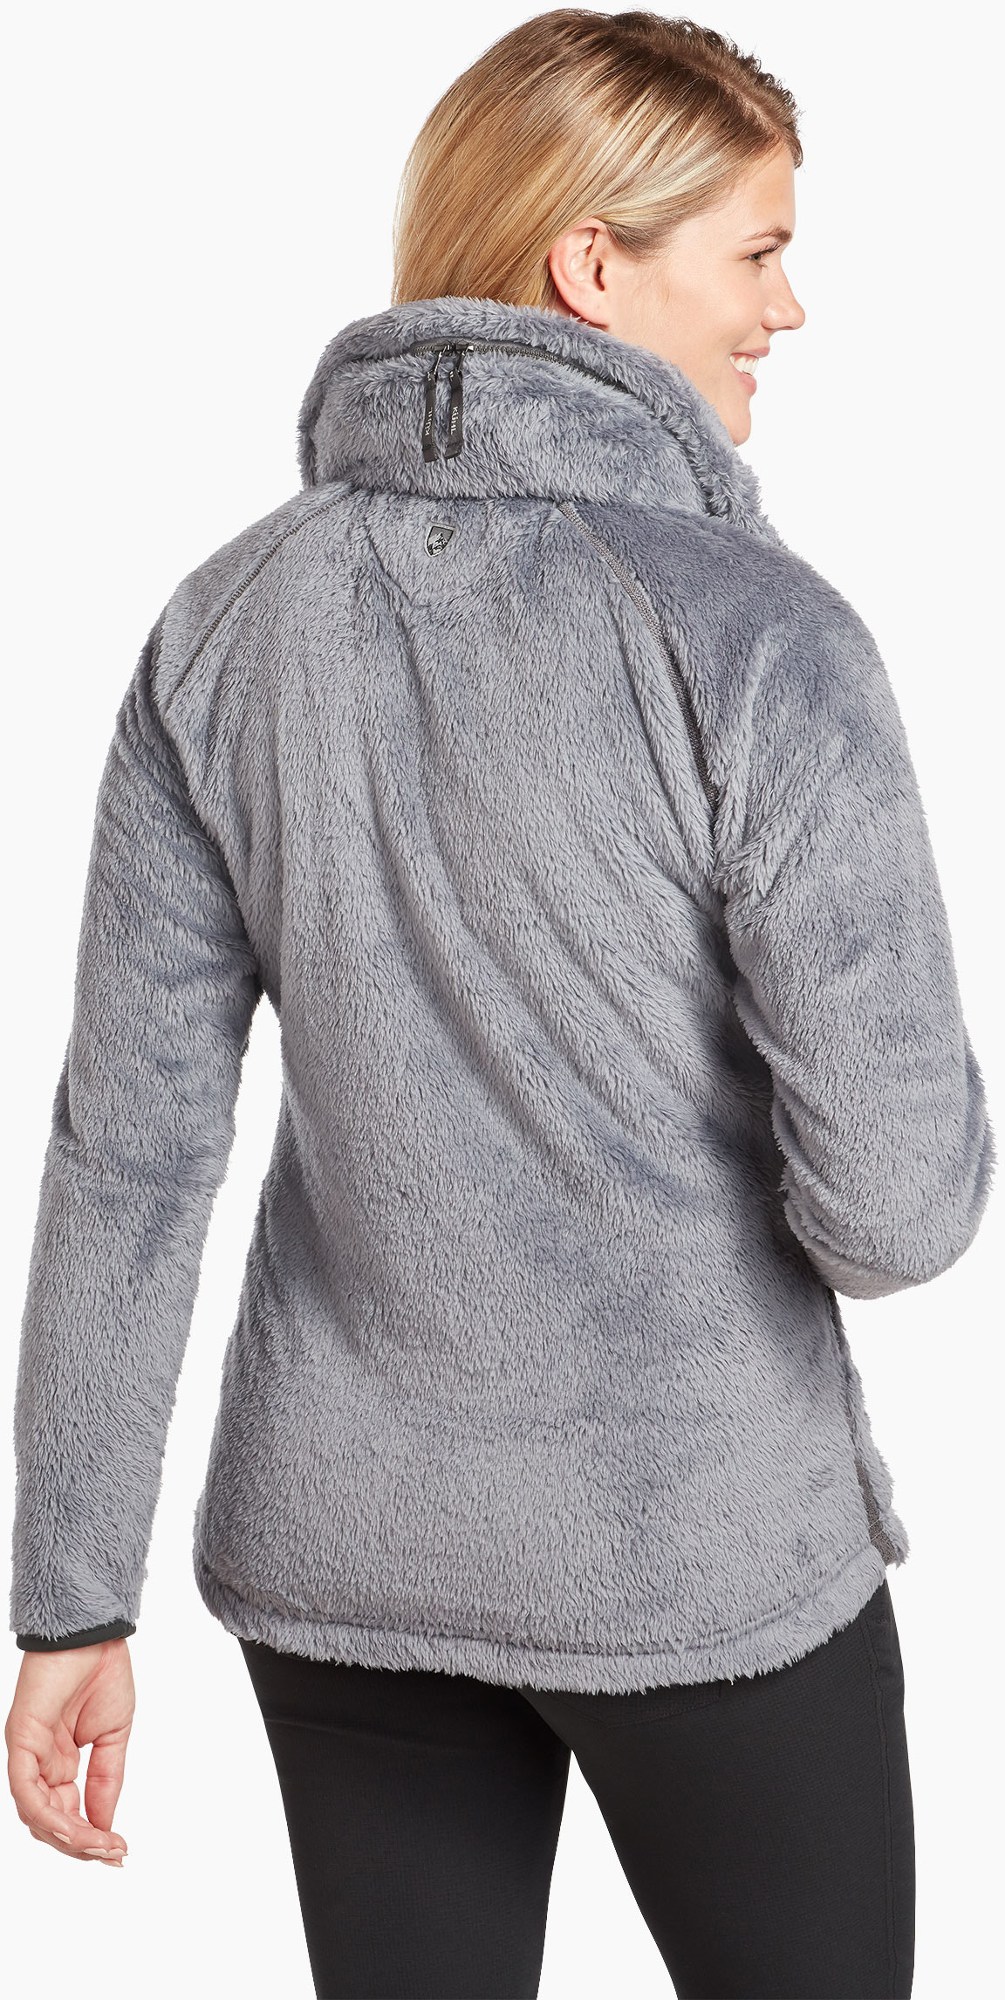 Kuhl Womens Hooded Jacket Large L Zip Pockets Thumbhole Gray Stretch